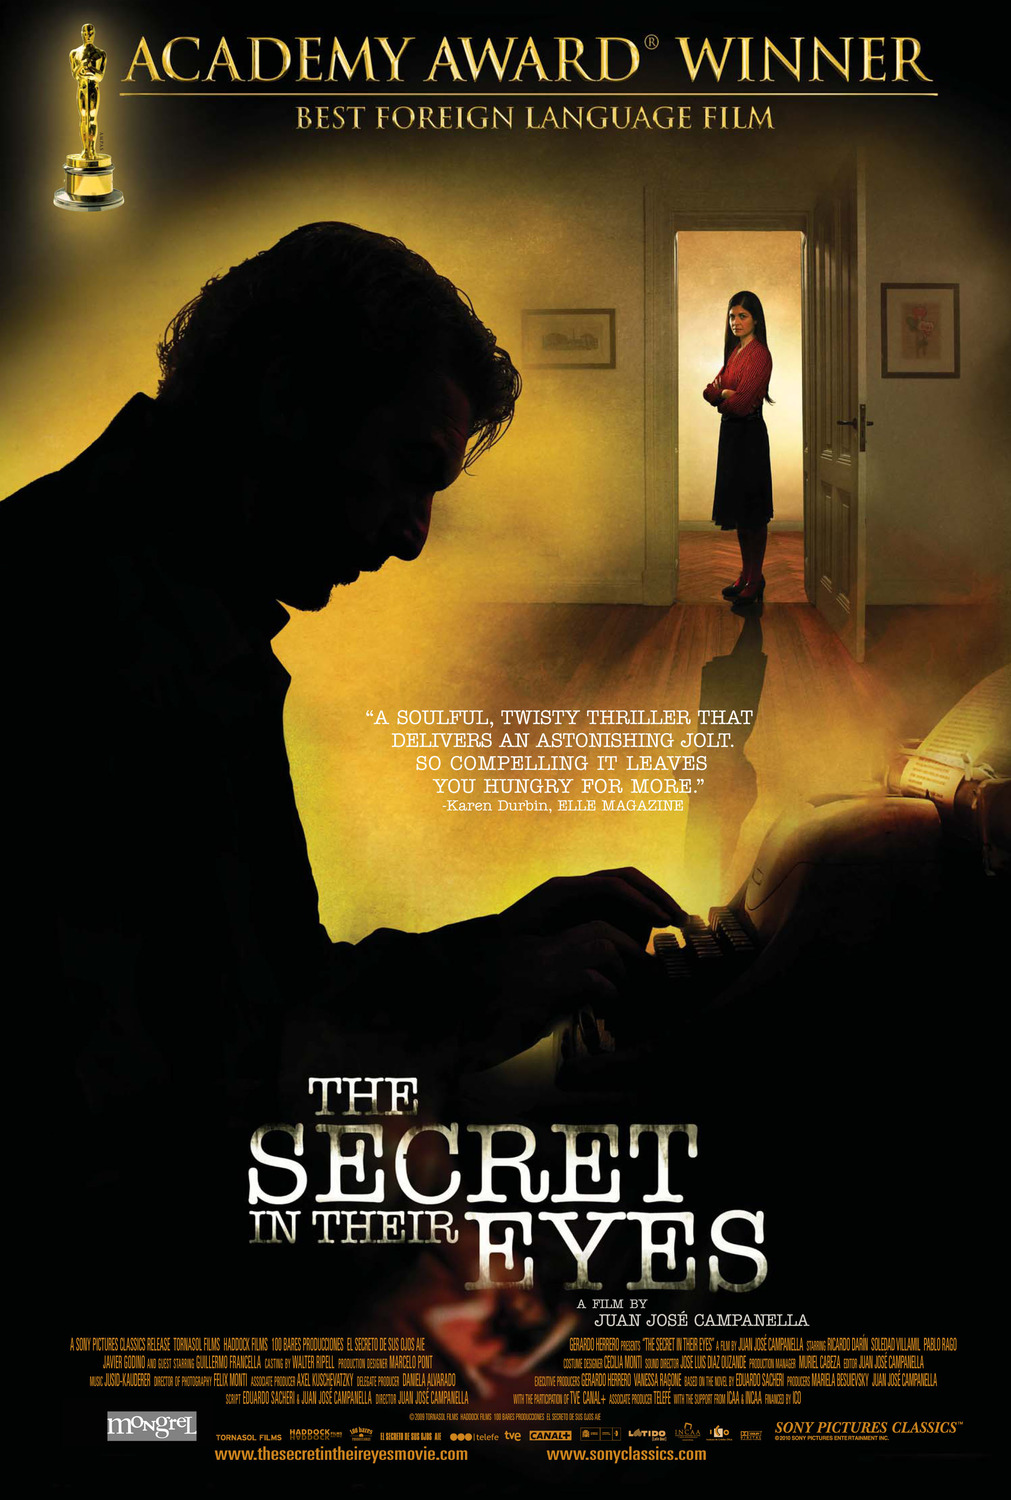 Extra Large Movie Poster Image for El secreto de sus ojos (#2 of 9)